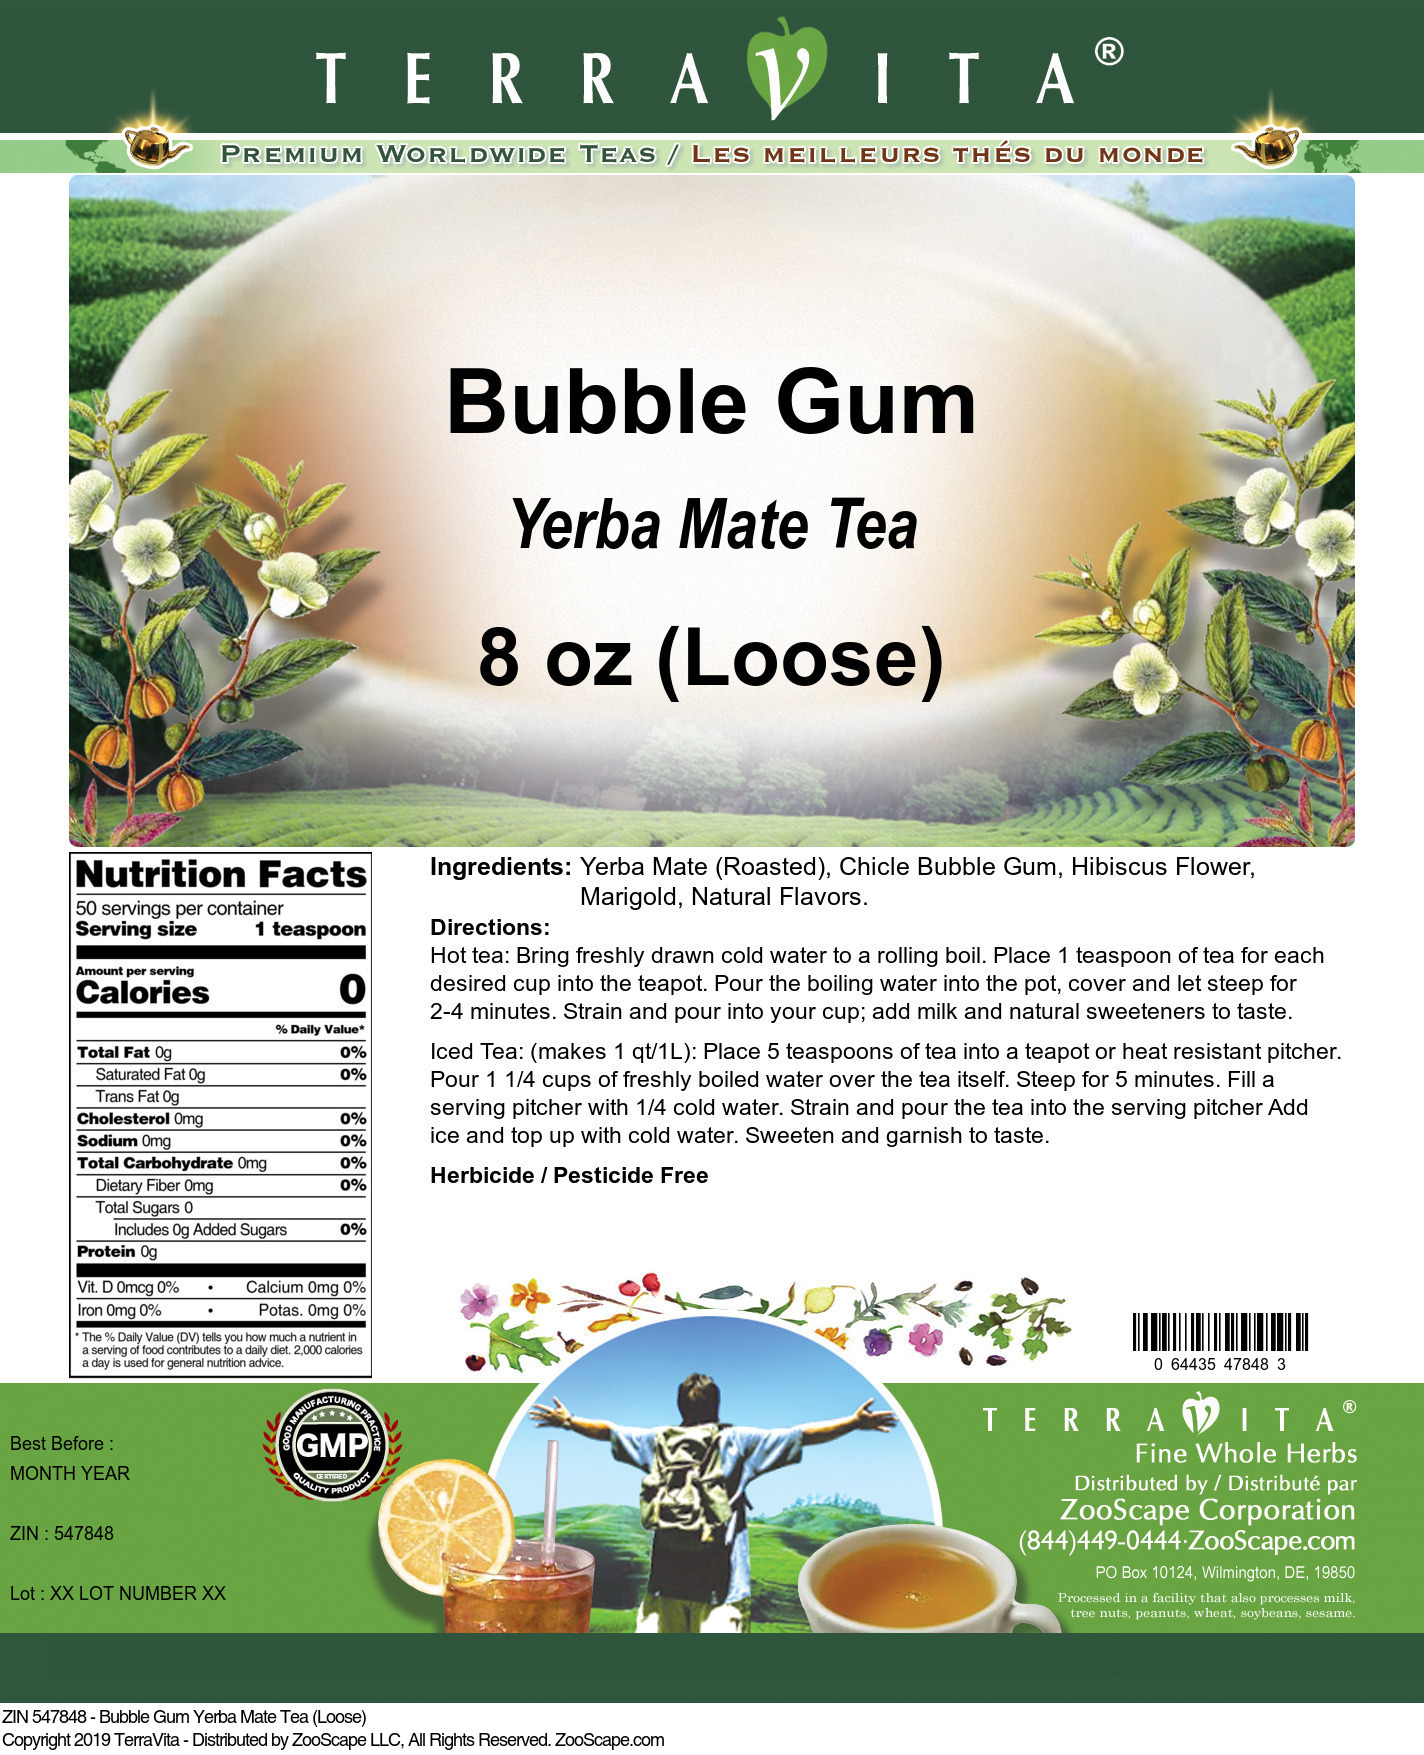 Bubble Gum Yerba Mate Tea (Loose) - Label